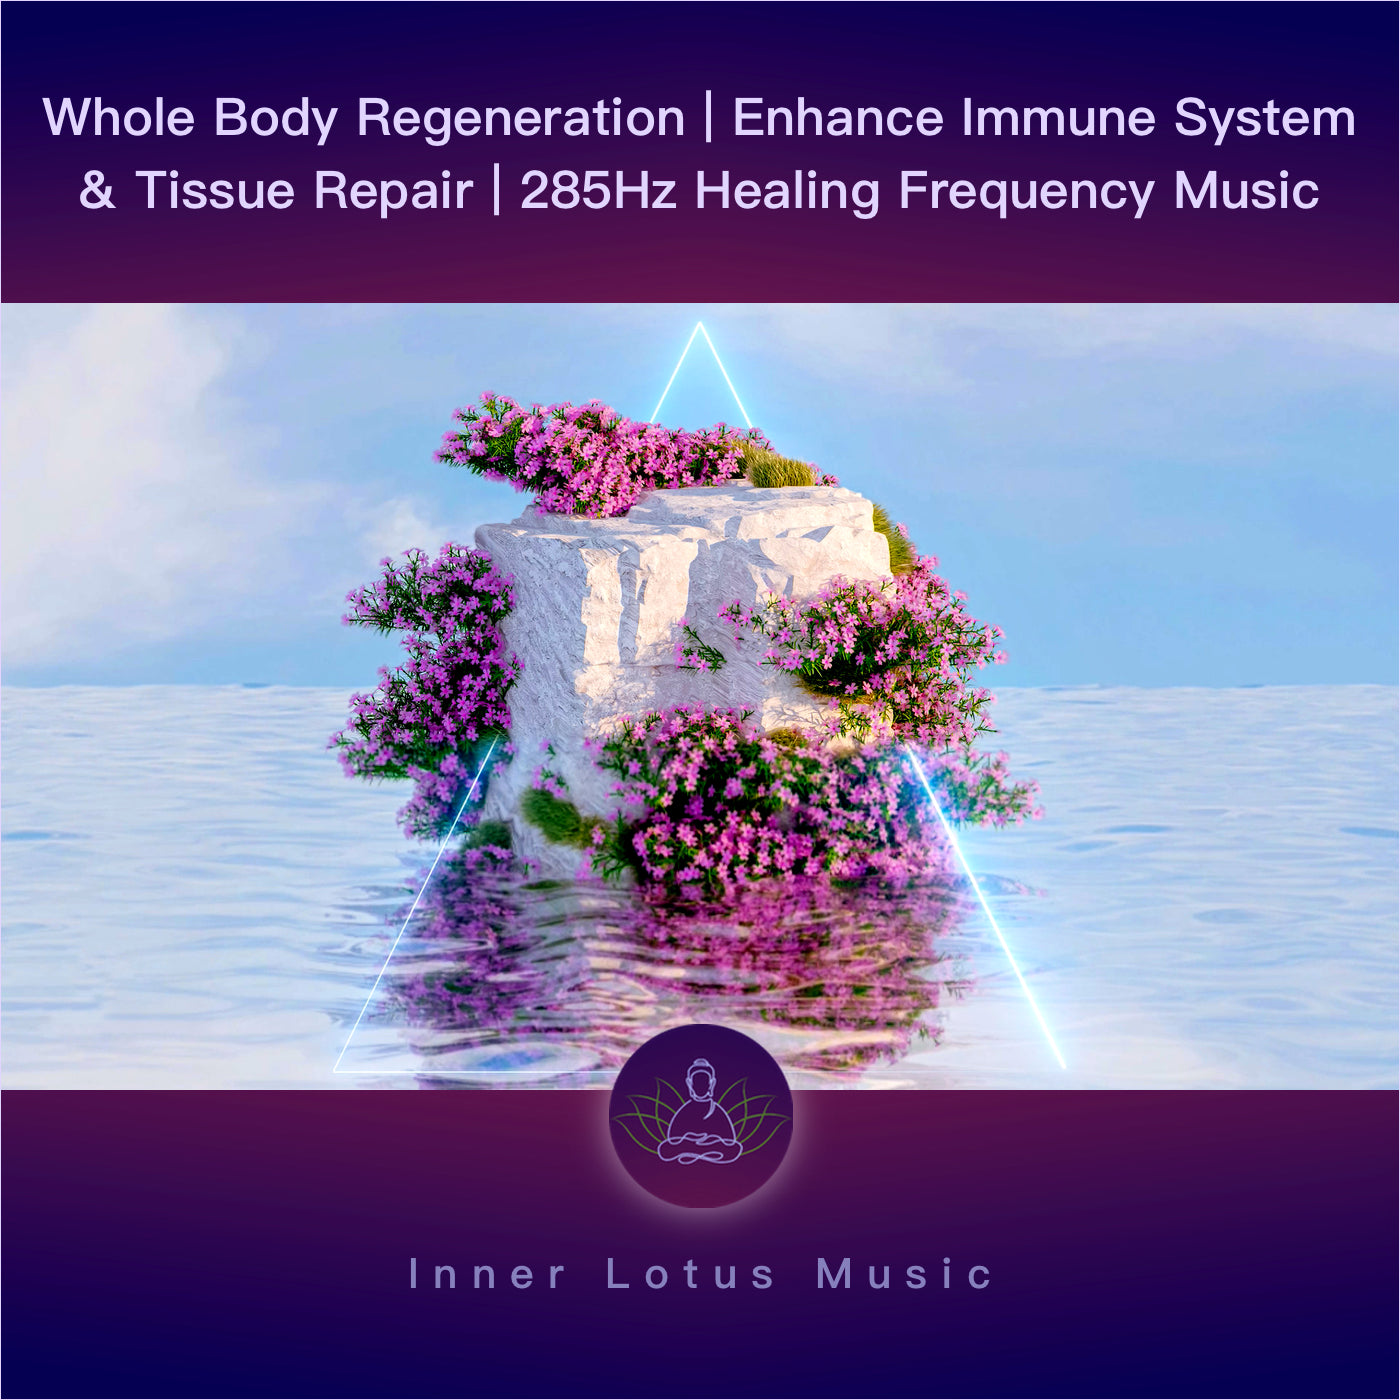 Whole Body Regeneration | Enhance Immune System & Tissue Repair | 285Hz Healing Frequency Music